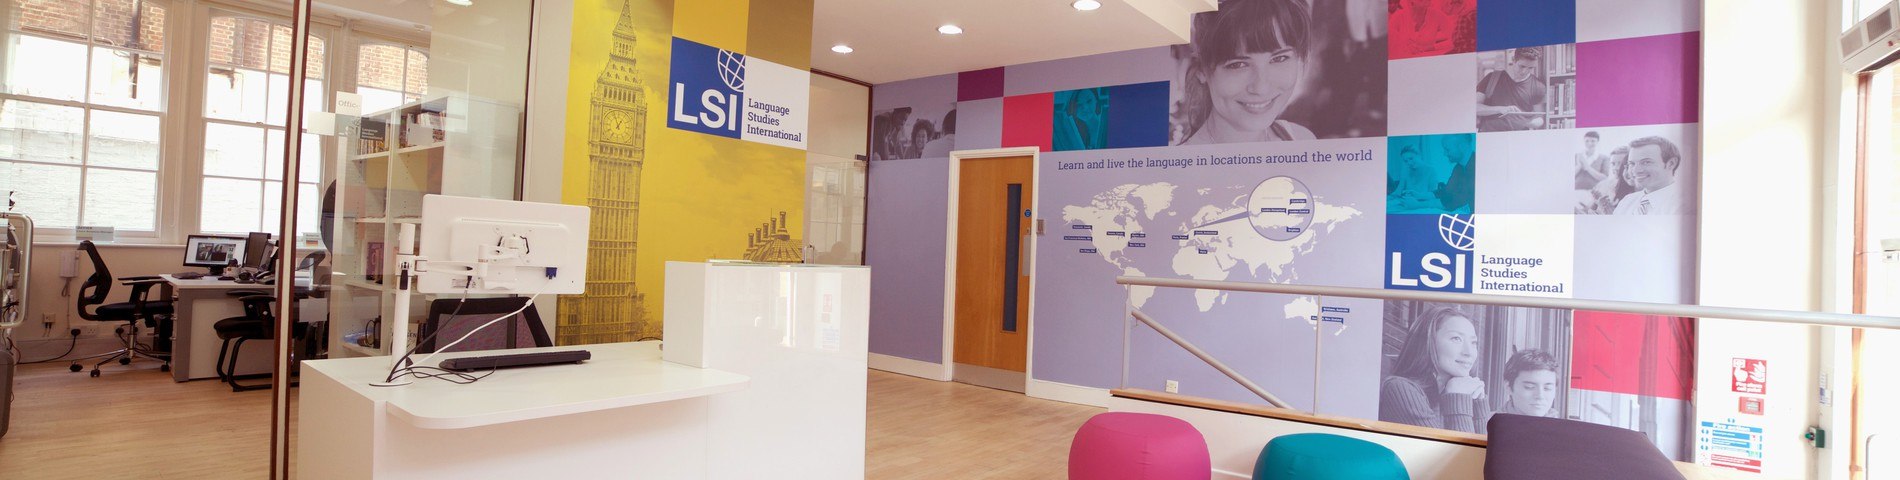 LSI - Language Studies International - Central picture 1